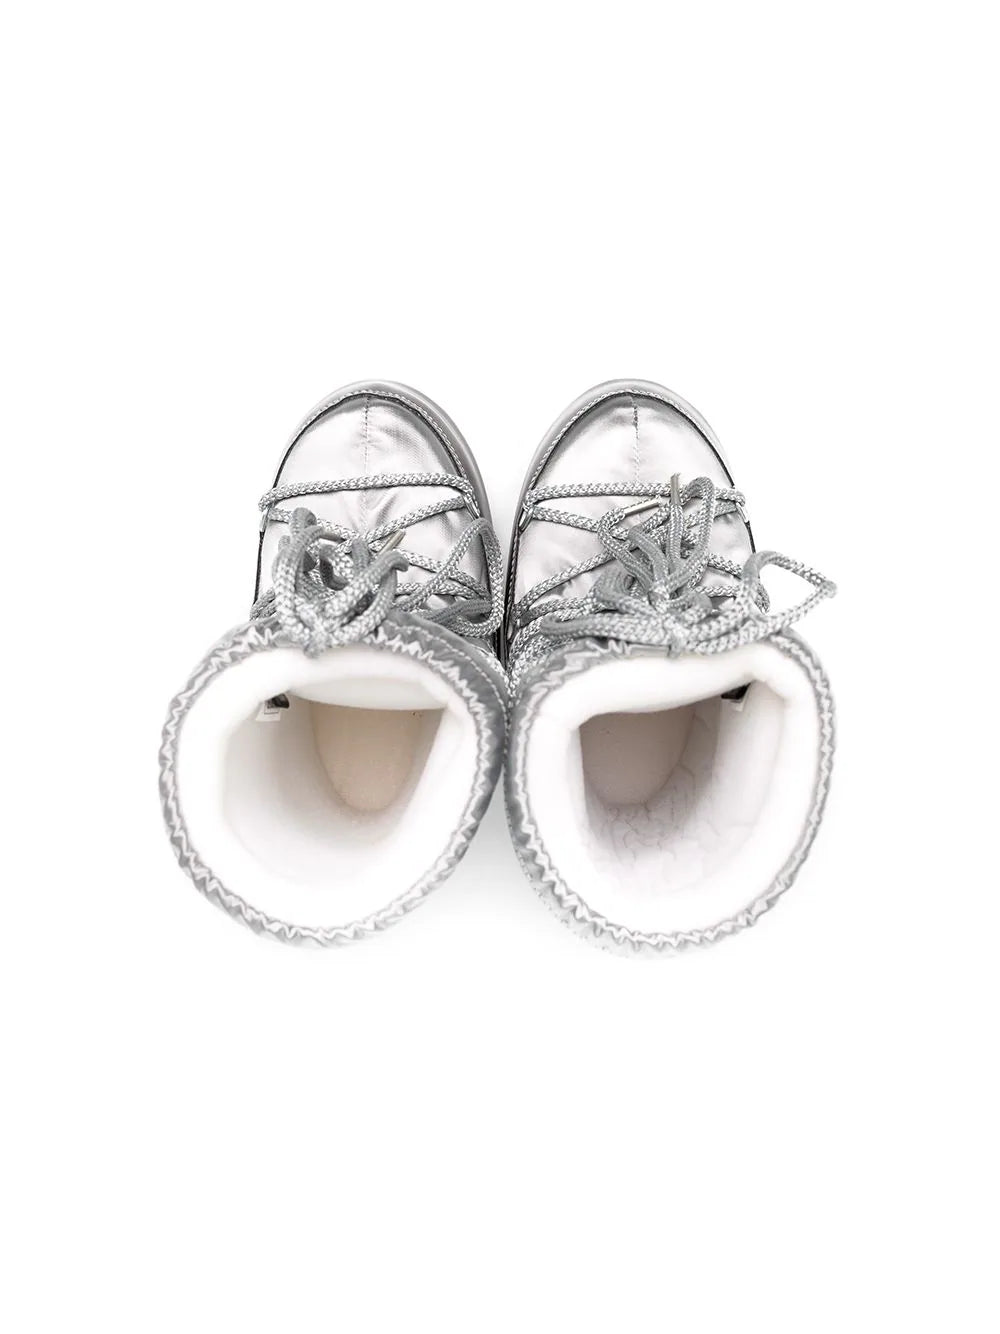 MOON BOOT KIDS Icon Glance Boots Silver - MAISONDEFASHION.COM